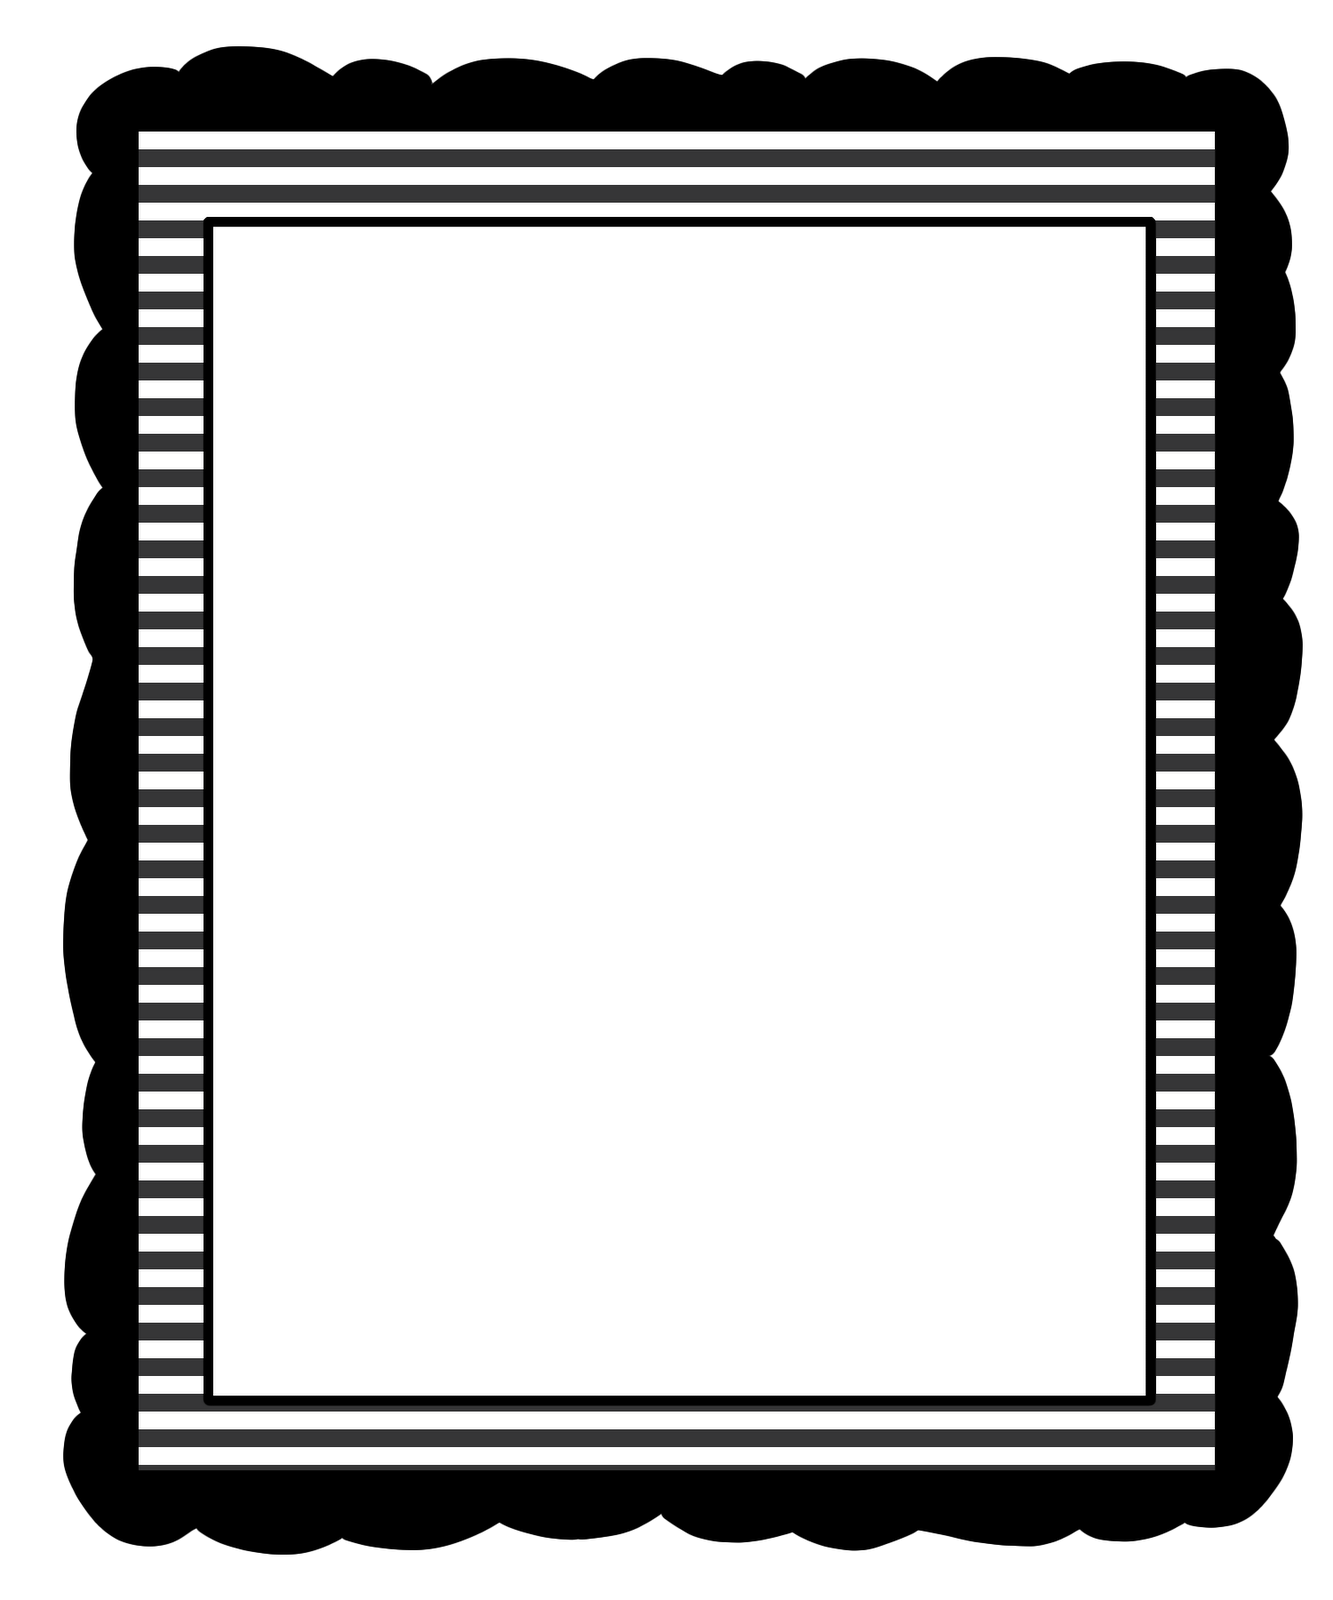 Images For > Black And White Checkered Border